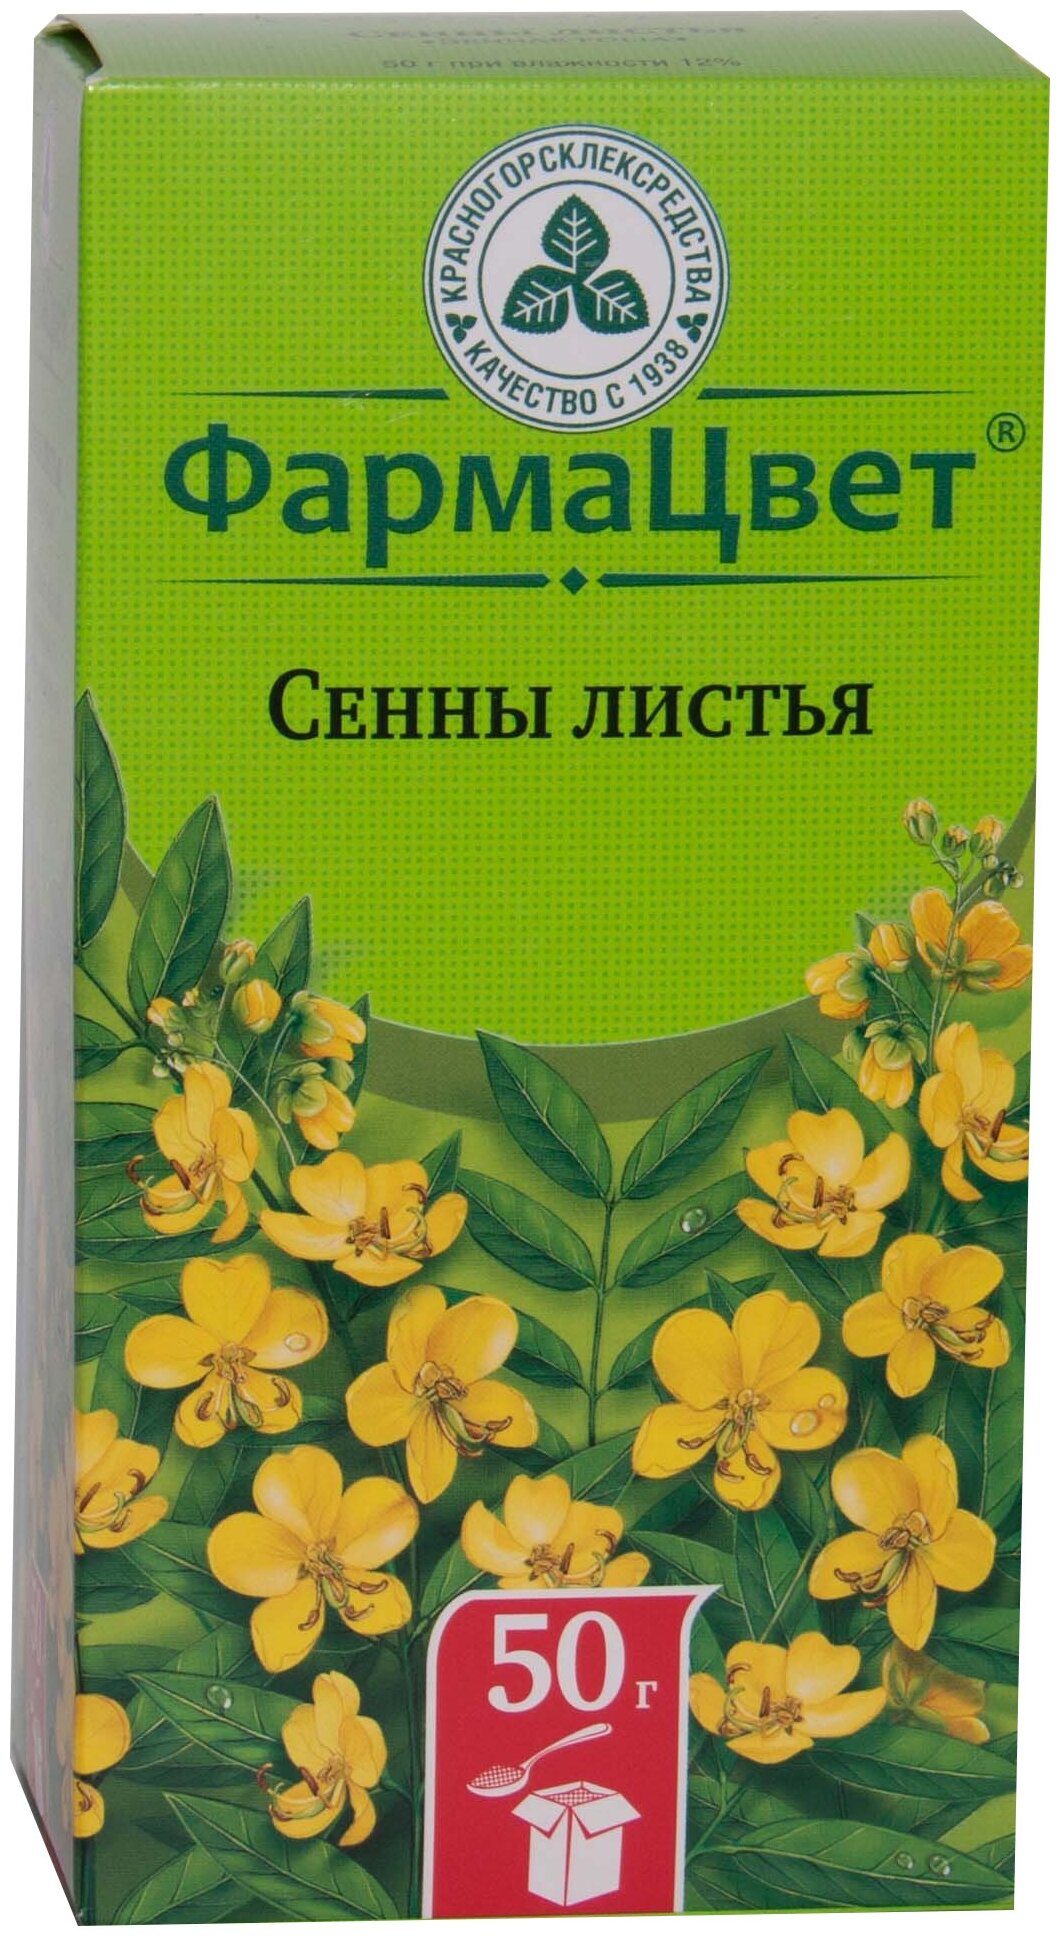 Красногорсклексредства листья ФармаЦвет Сенны, 50 г